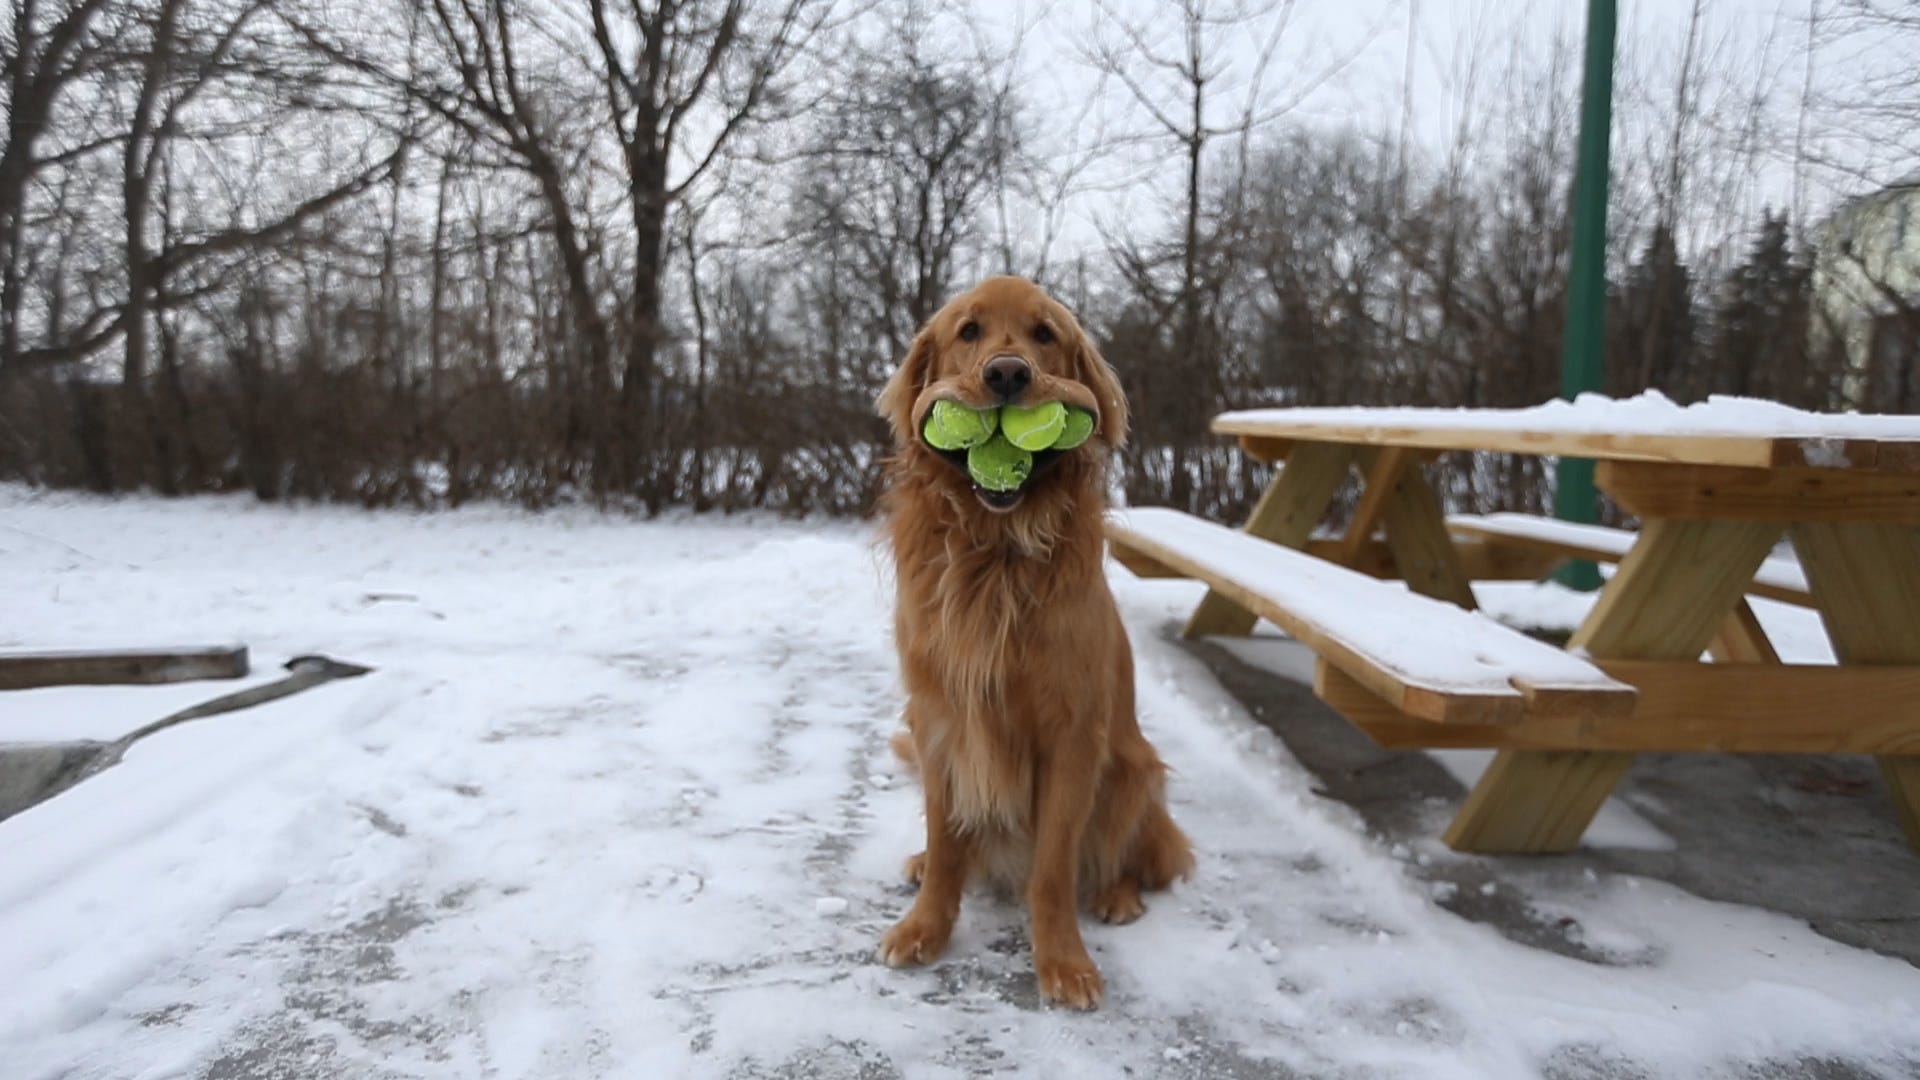 golden retriever loves tennis balls